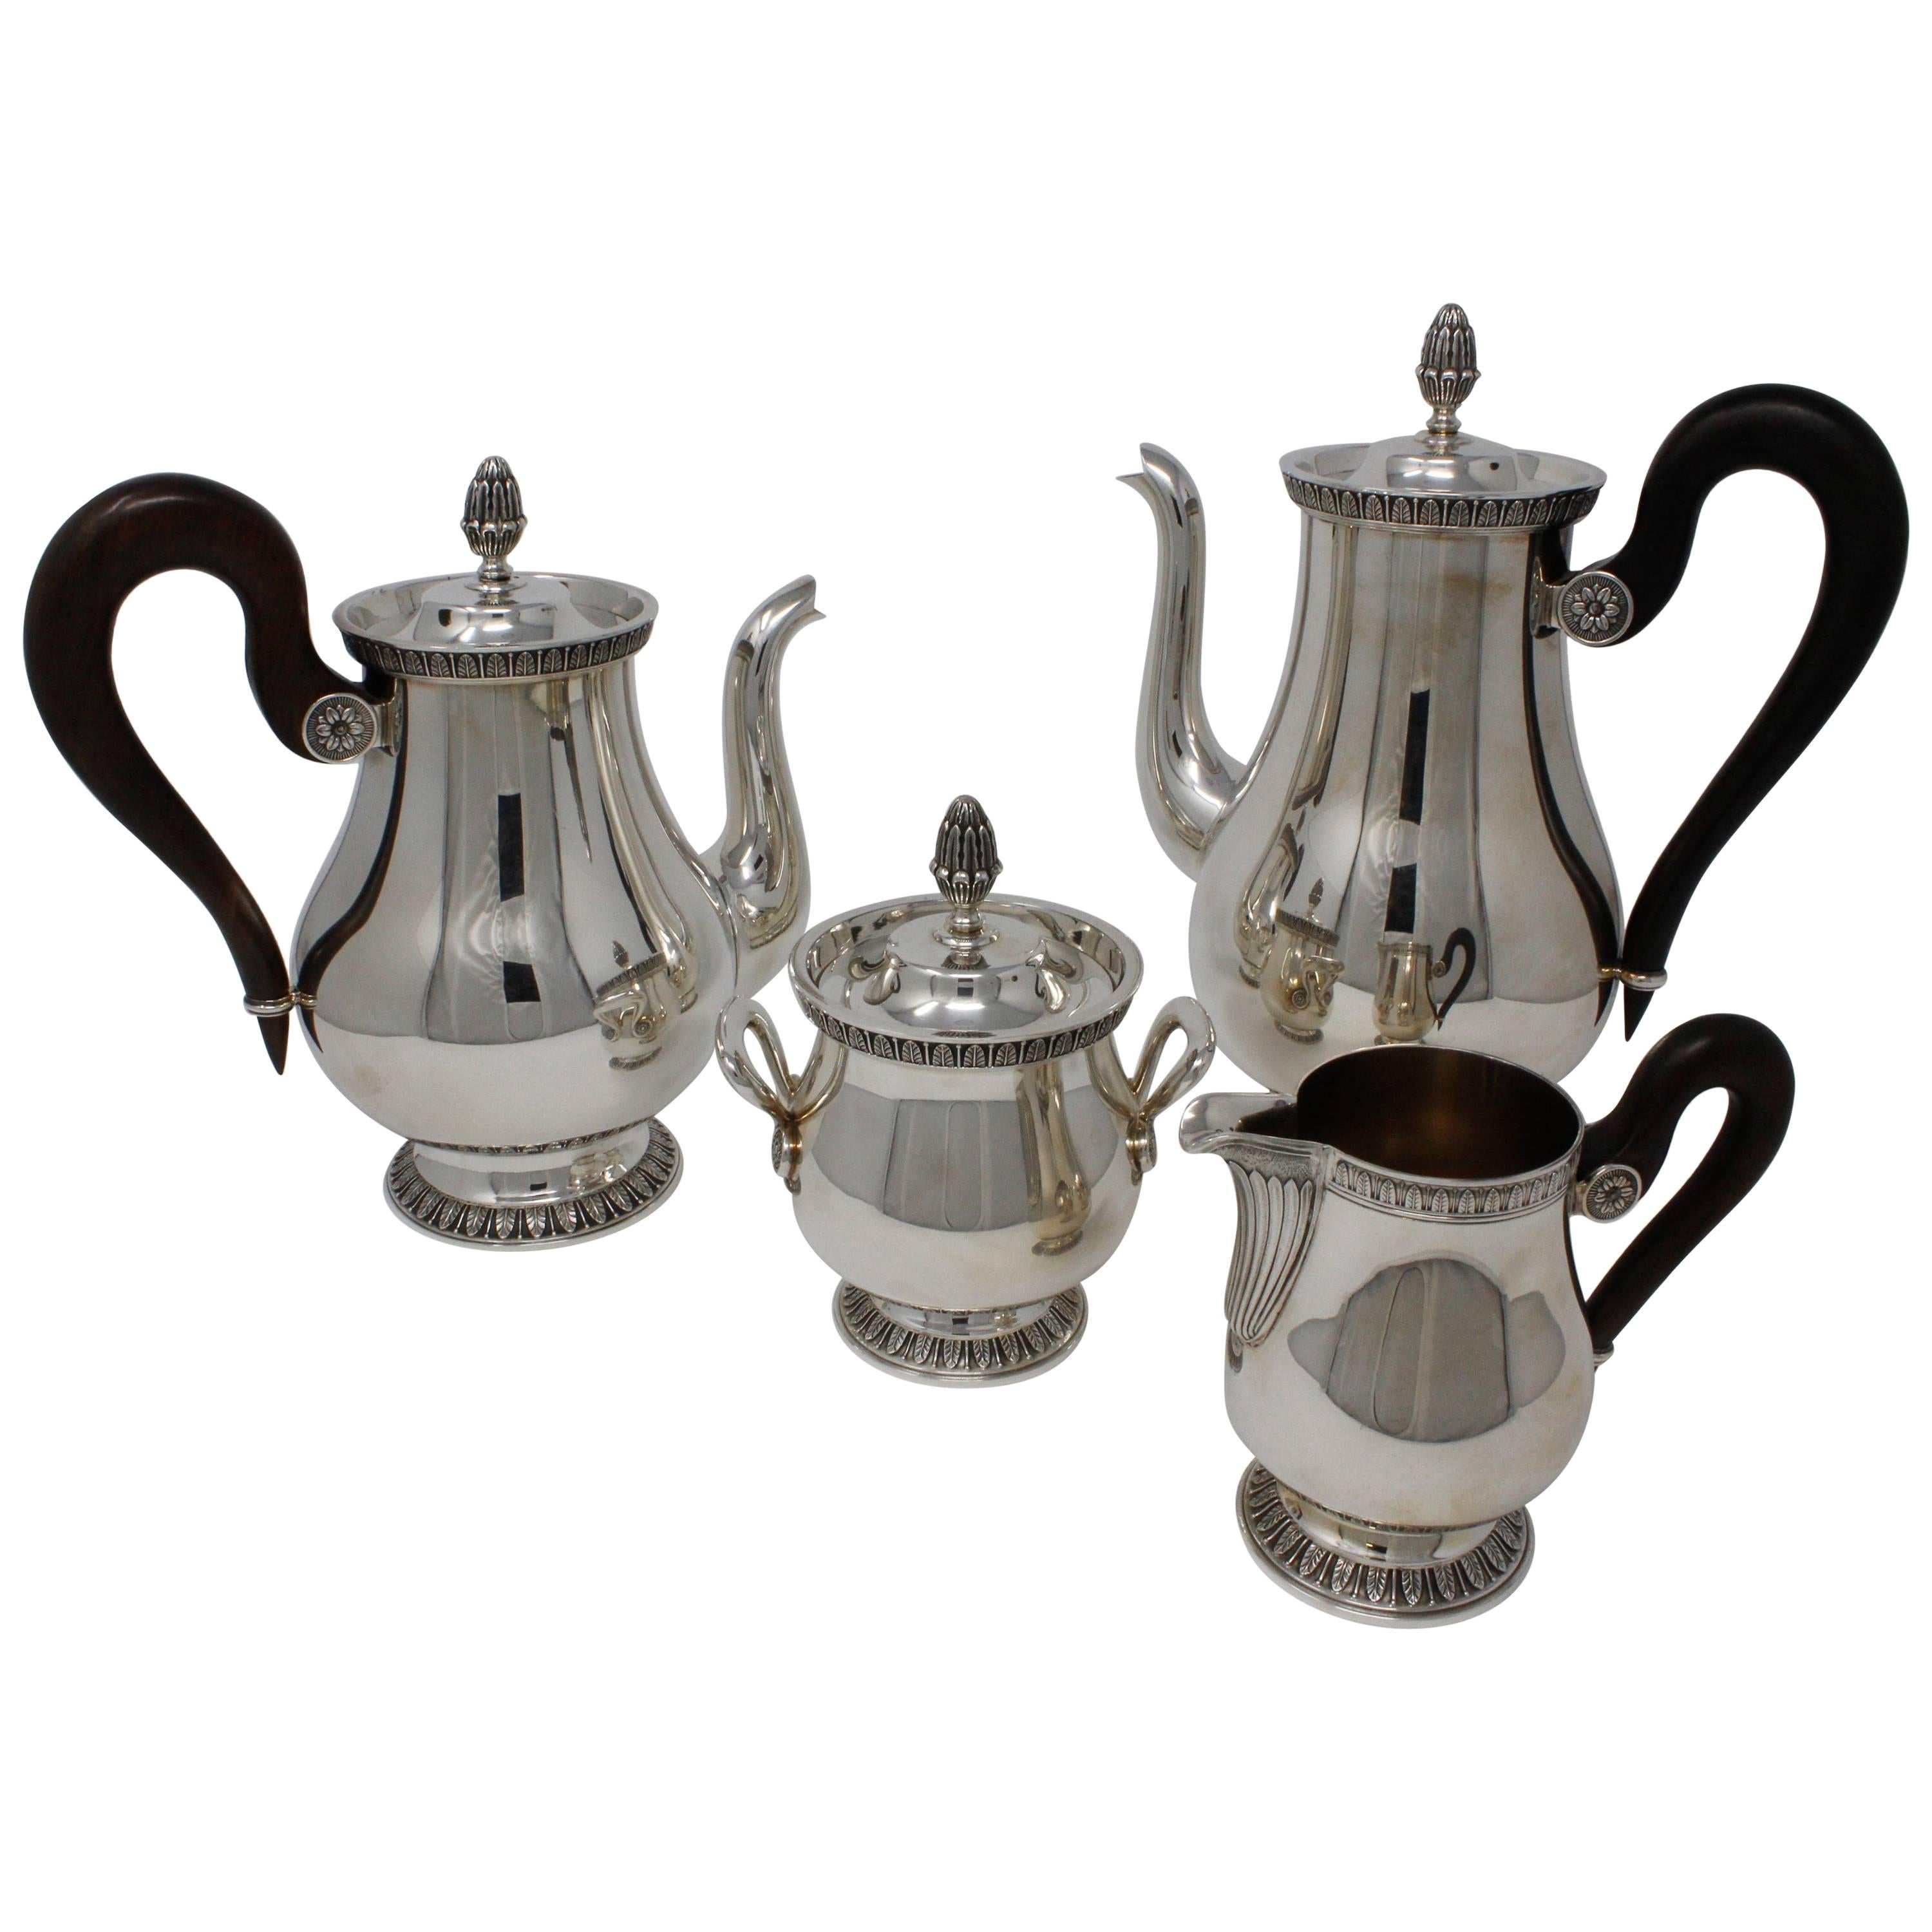 Four-Piece Christofle Tea Set, Silver Plated, Malmaison-Beauharnais Pattern For Sale